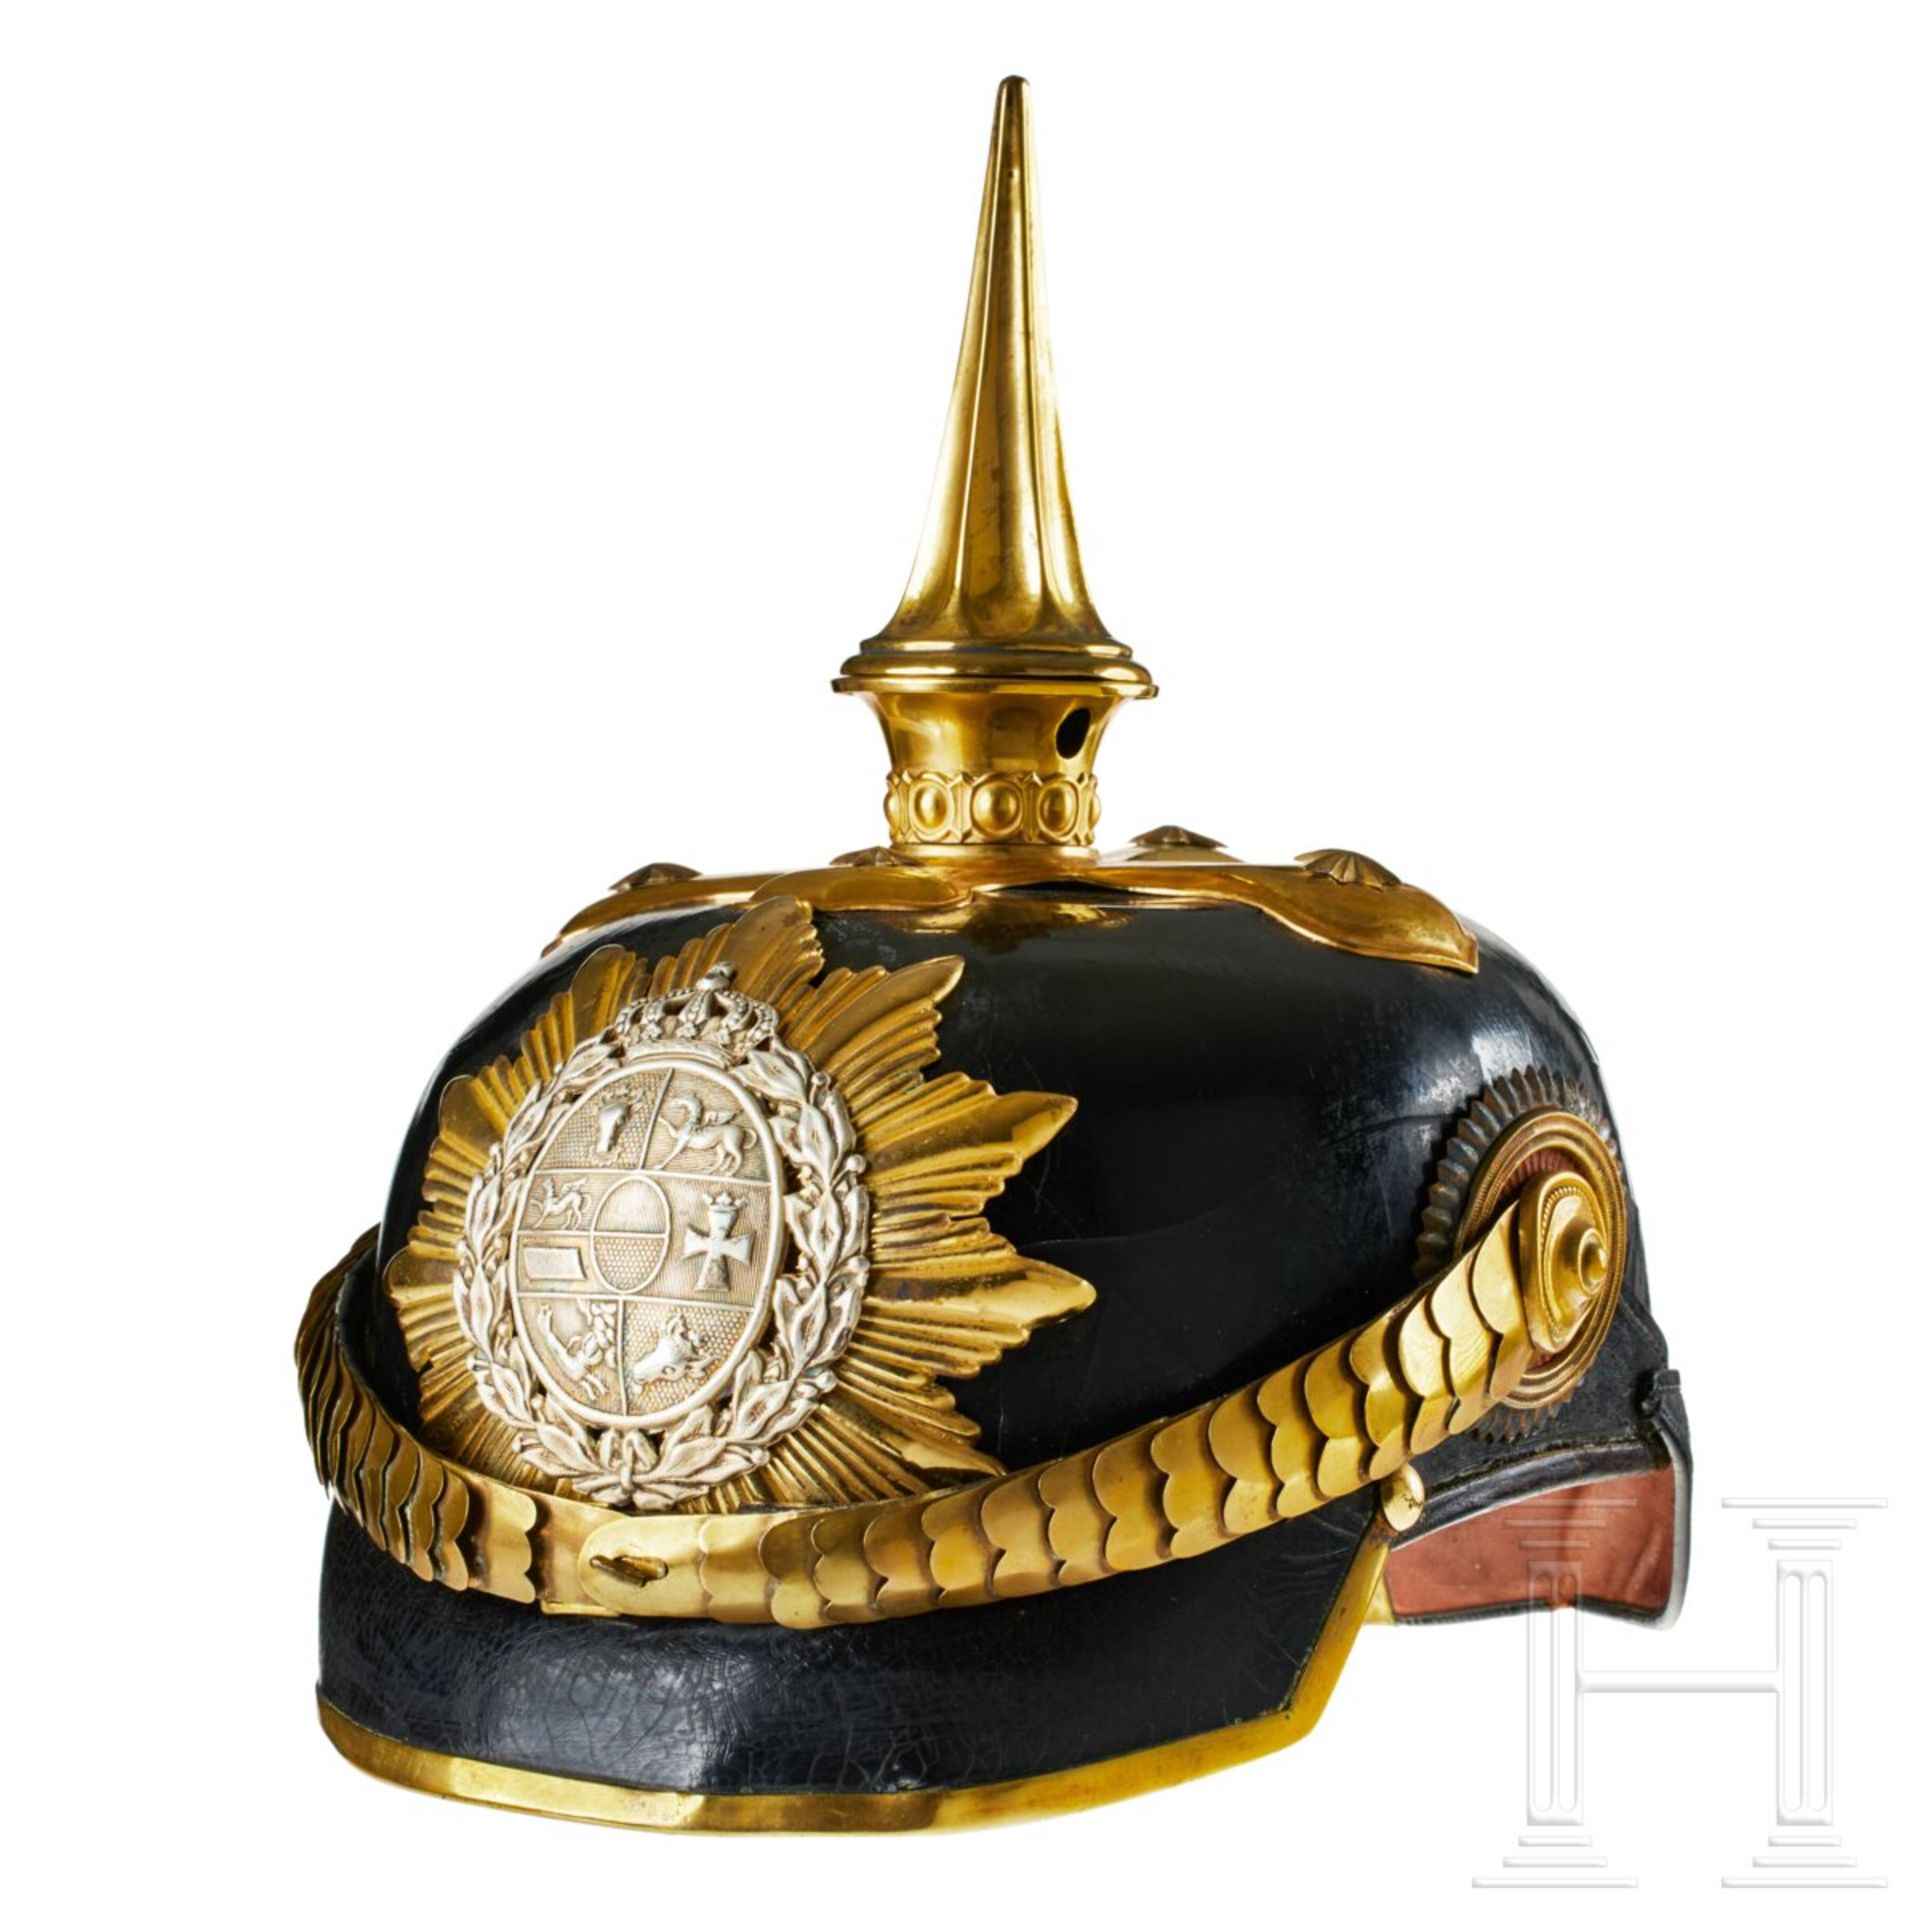 A helmet for DR 17 Mecklenburg Dragoon Officers